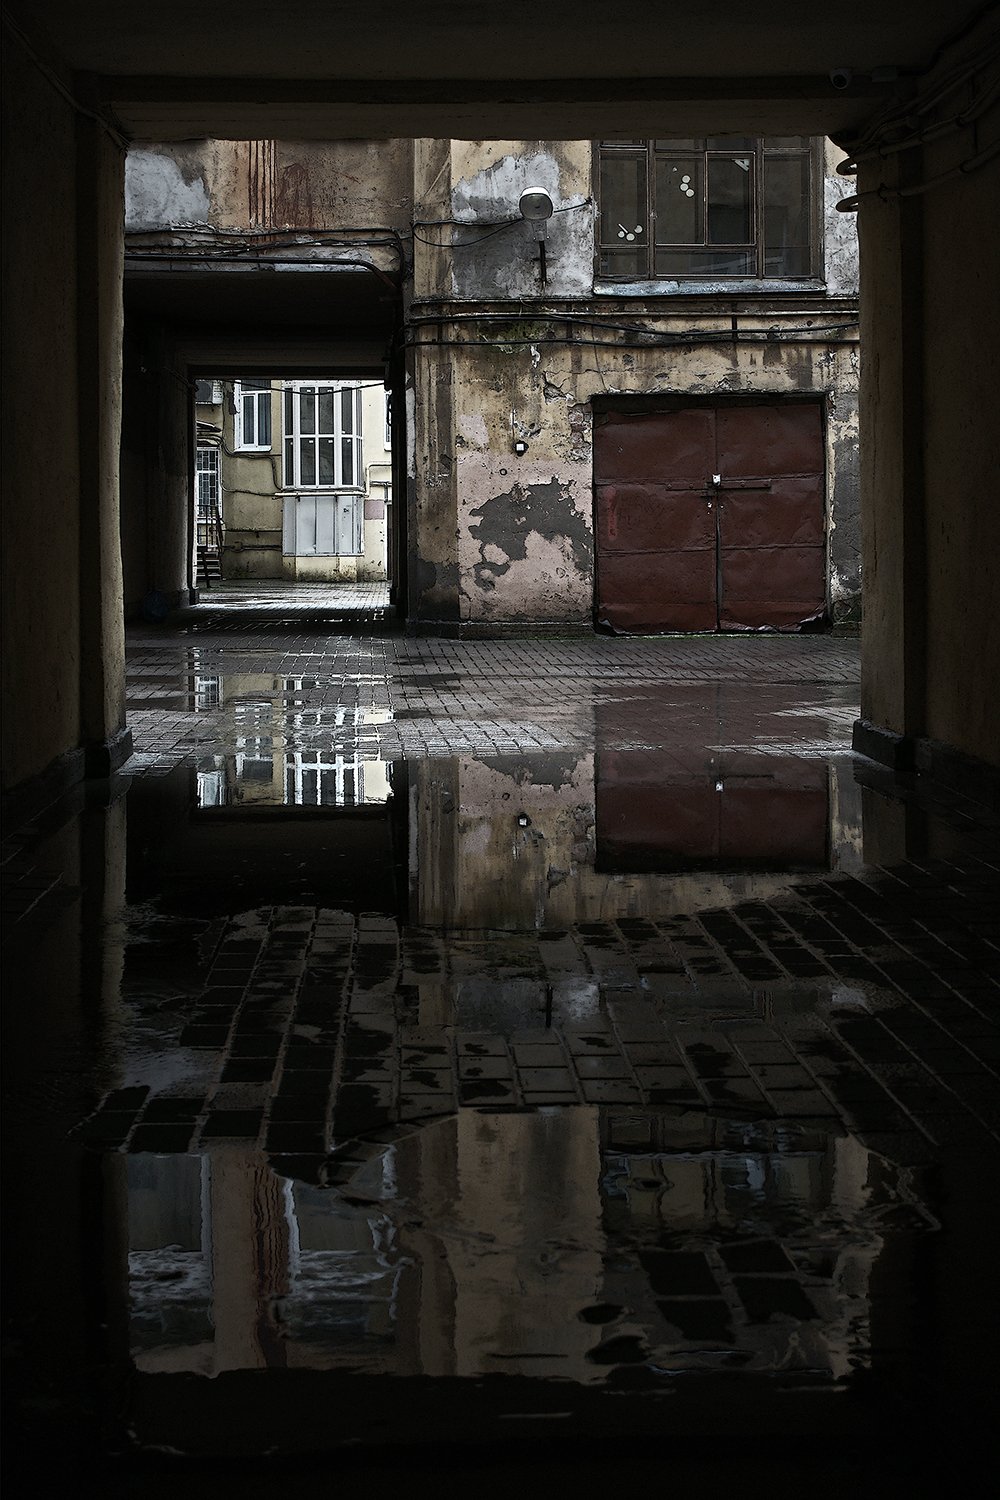 #deep.spb, #deepspb, #санктпетербург, #петербург, #спб, #питер, #saintpetersburg, #petersburg, #spb, #piter, #город, #city, #street, #streetphoto, #streetphotography, #cityscape, #urbex, #urbexphoto, #urbanexploration, #abandoned, #steps, #door, #window, deep.spb